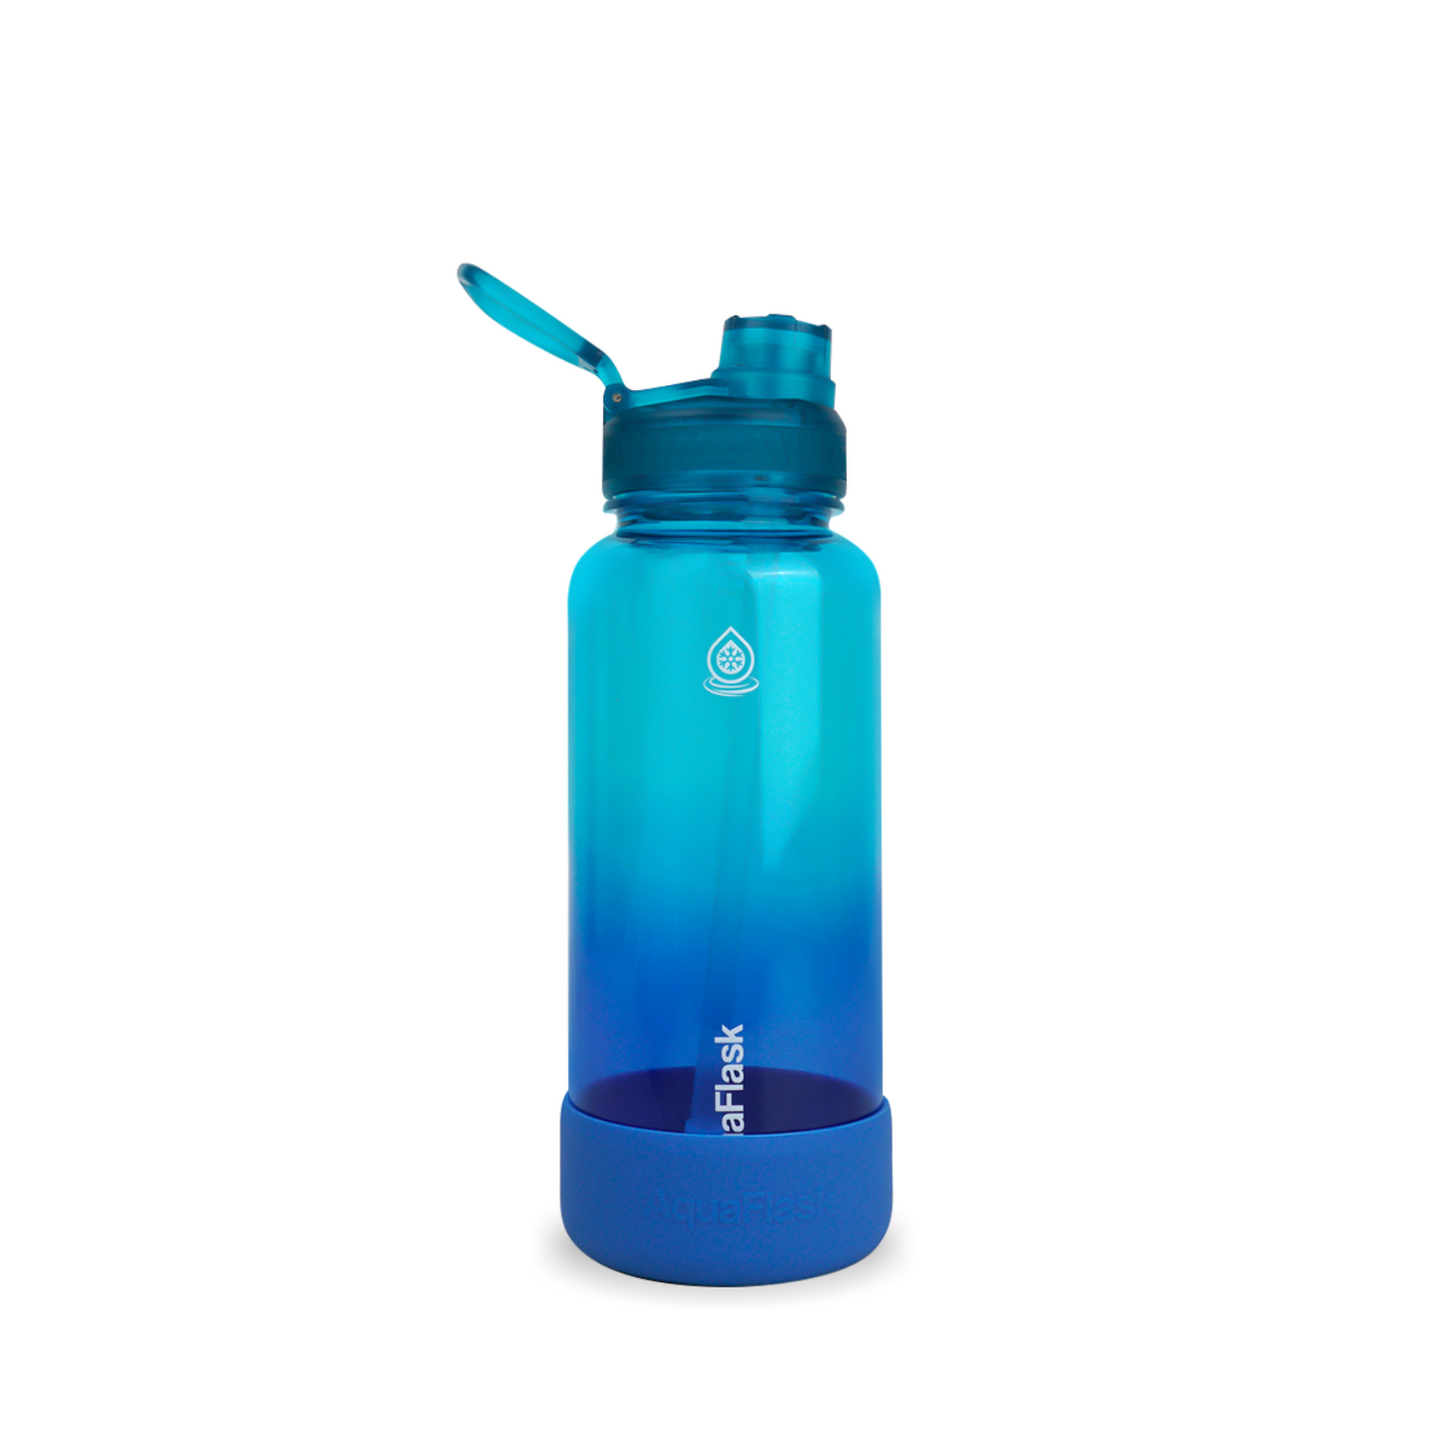 AquaFlask Trek BPA Free Triton Water Bottle 935ml (32oz)